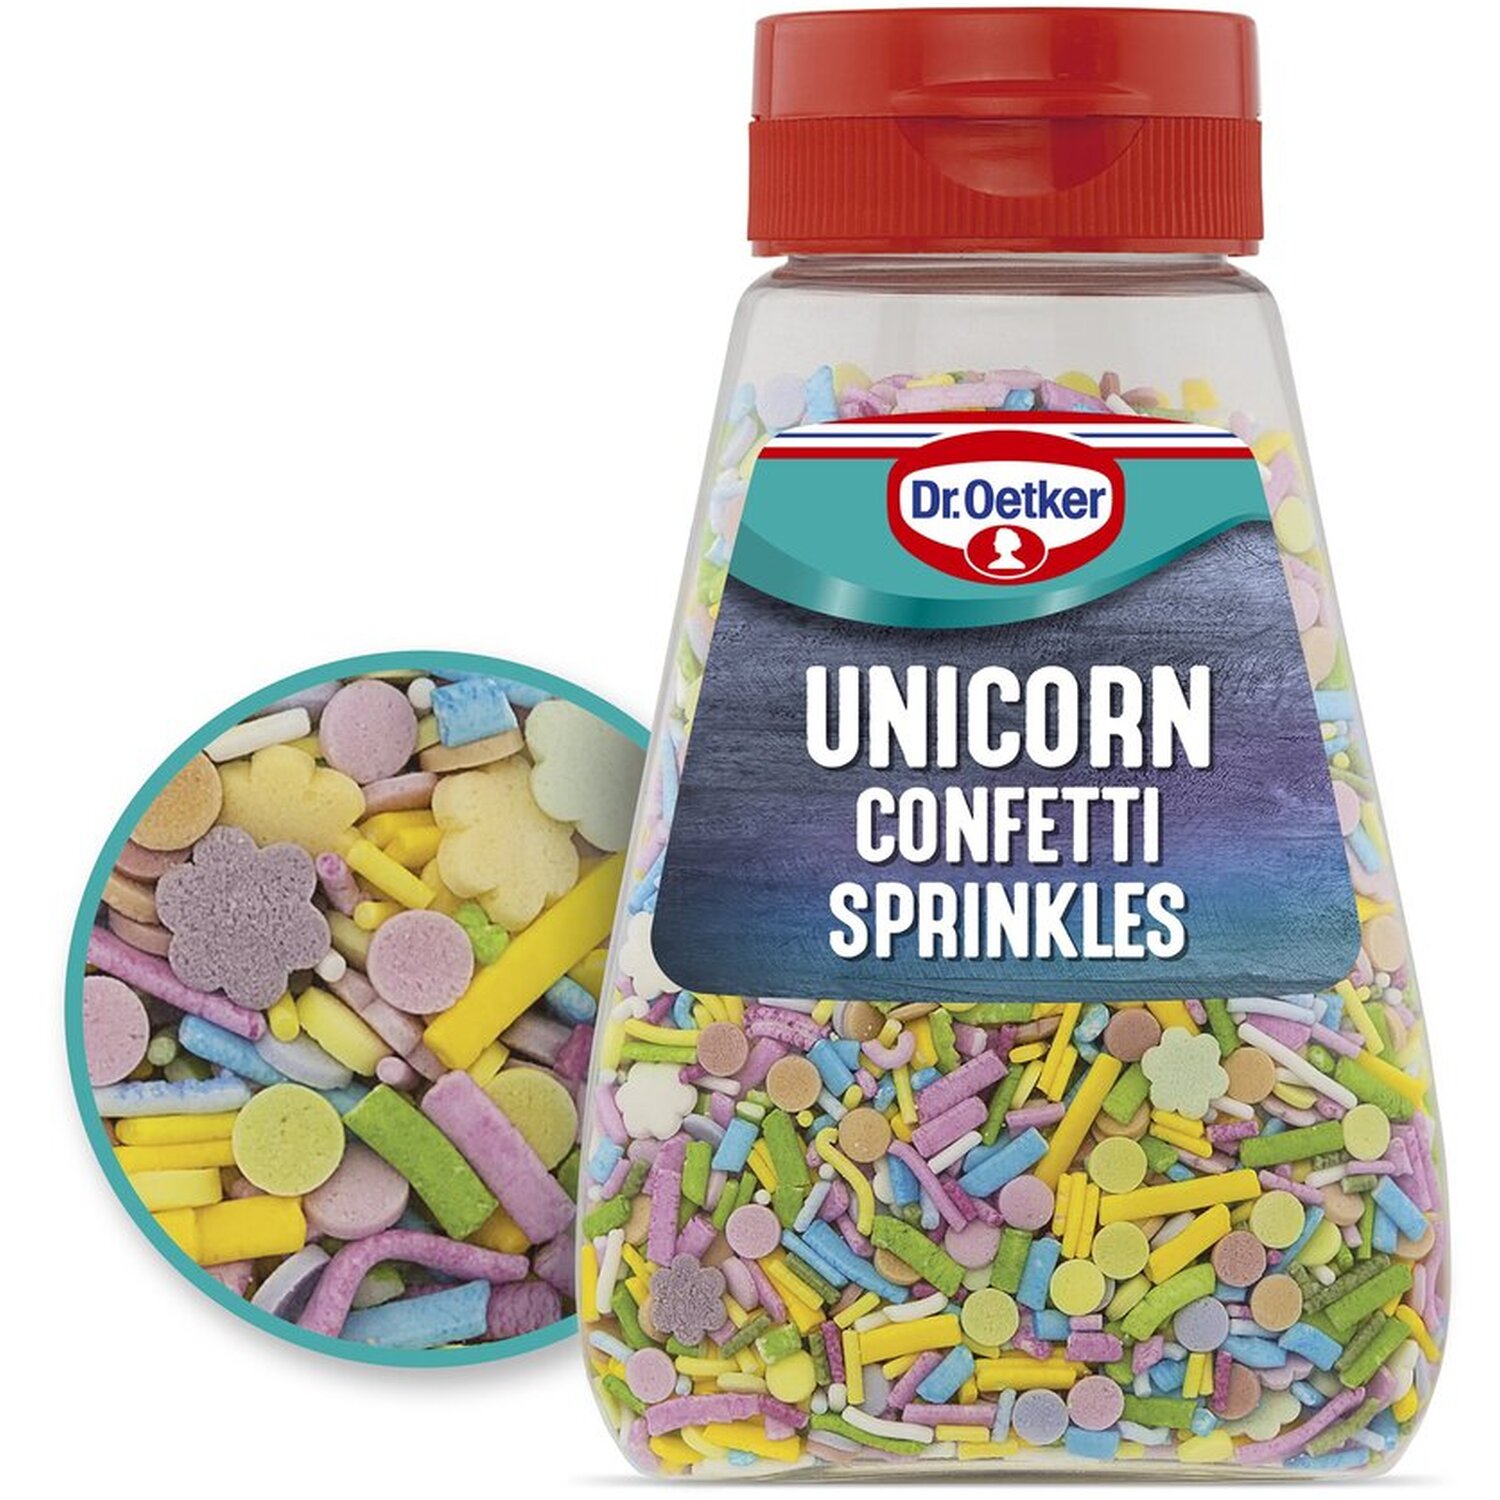 Dr. Oetker Unicorn Confetti Sprinkles Image